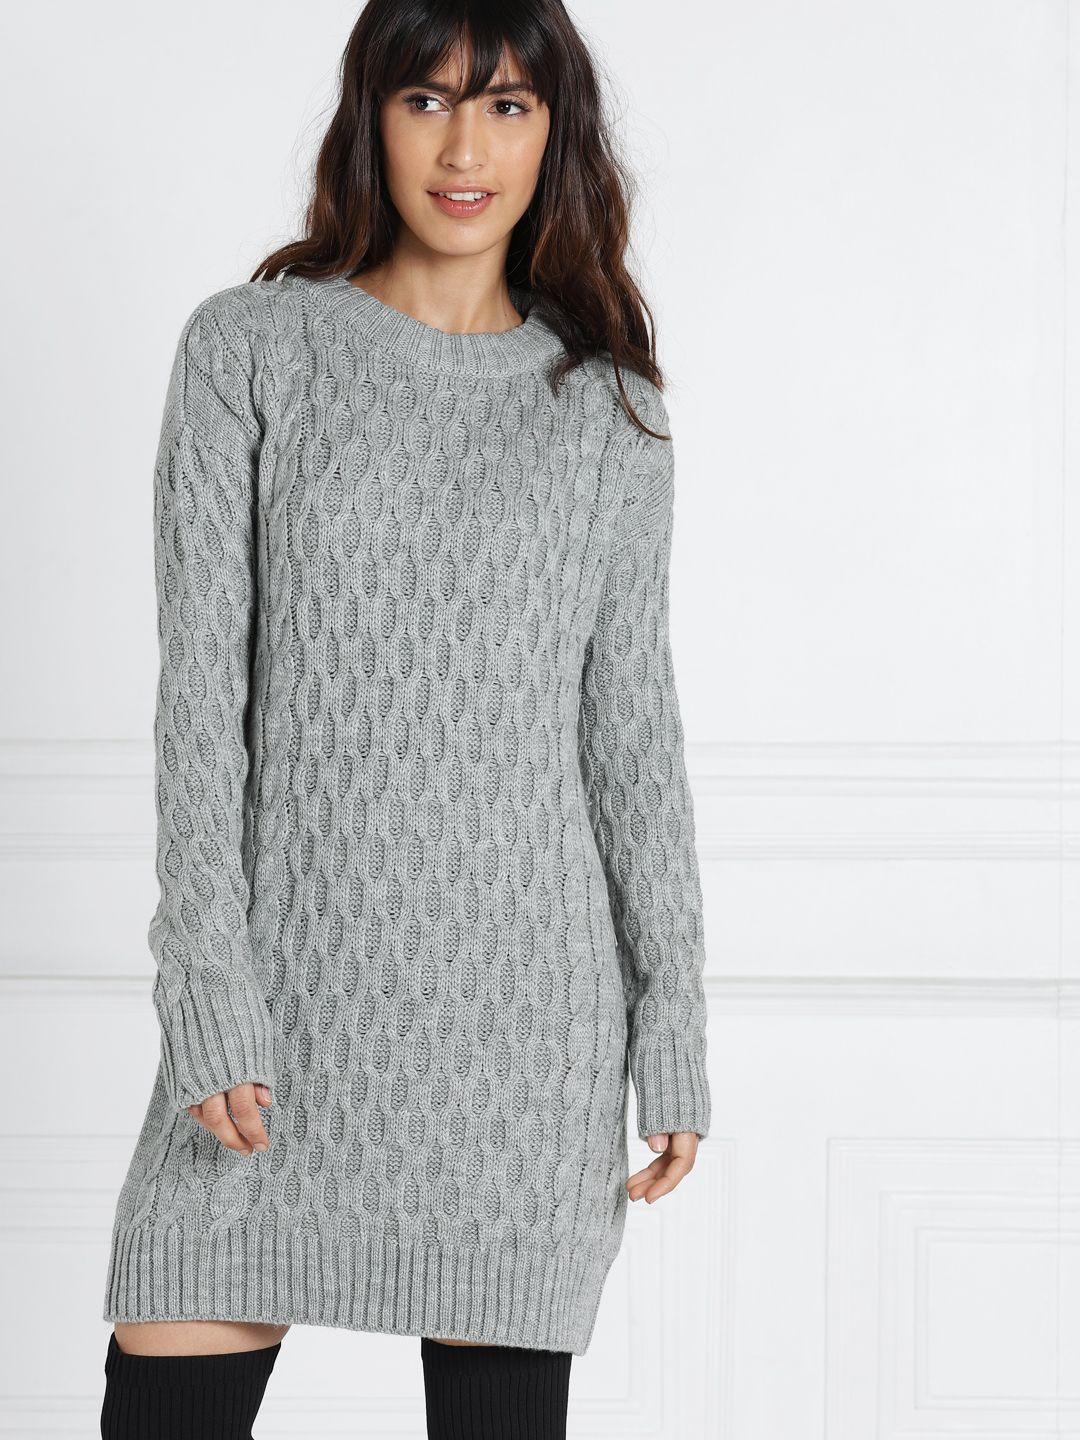 all about you women grey self design sweater sheath dress